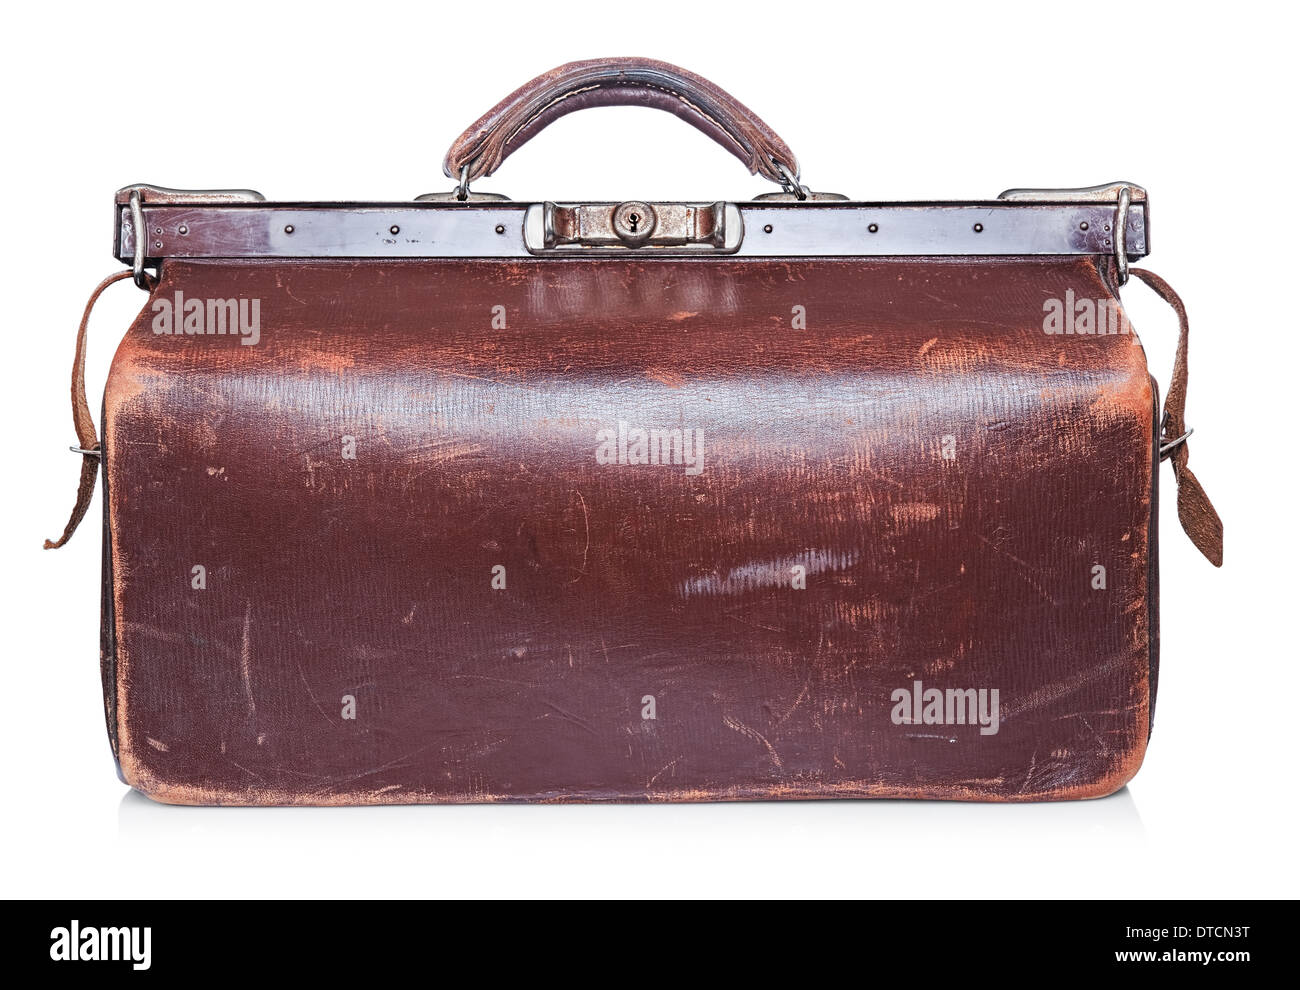 Marrone Vintage valise isolato su uno sfondo bianco Foto Stock